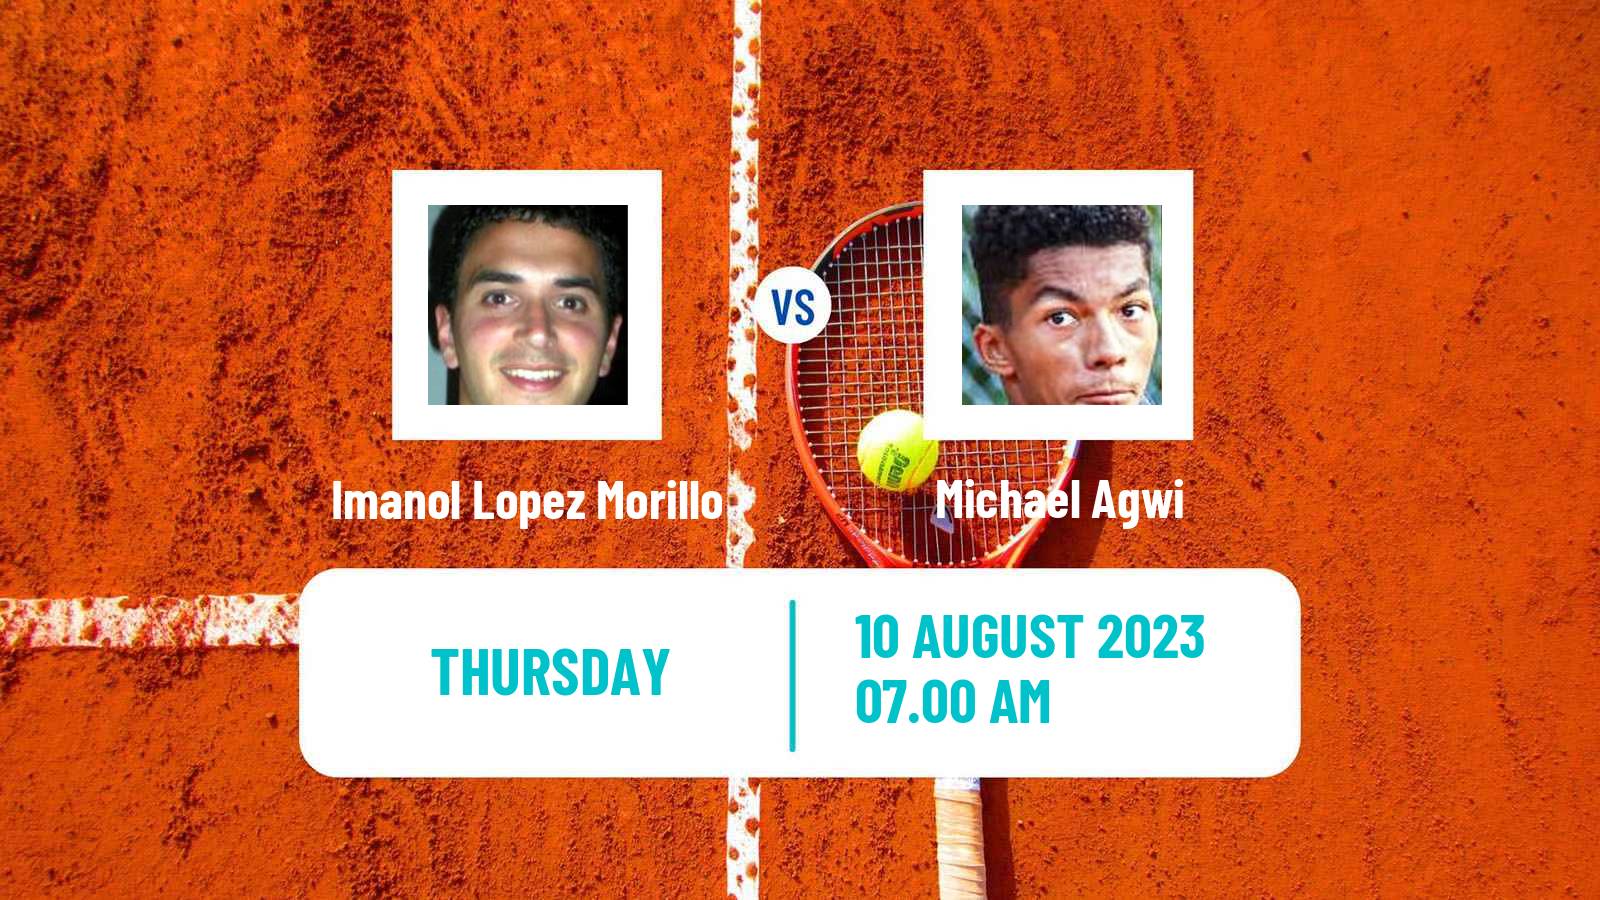 Tennis ITF M15 Frankfurt Am Main Men Imanol Lopez Morillo - Michael Agwi